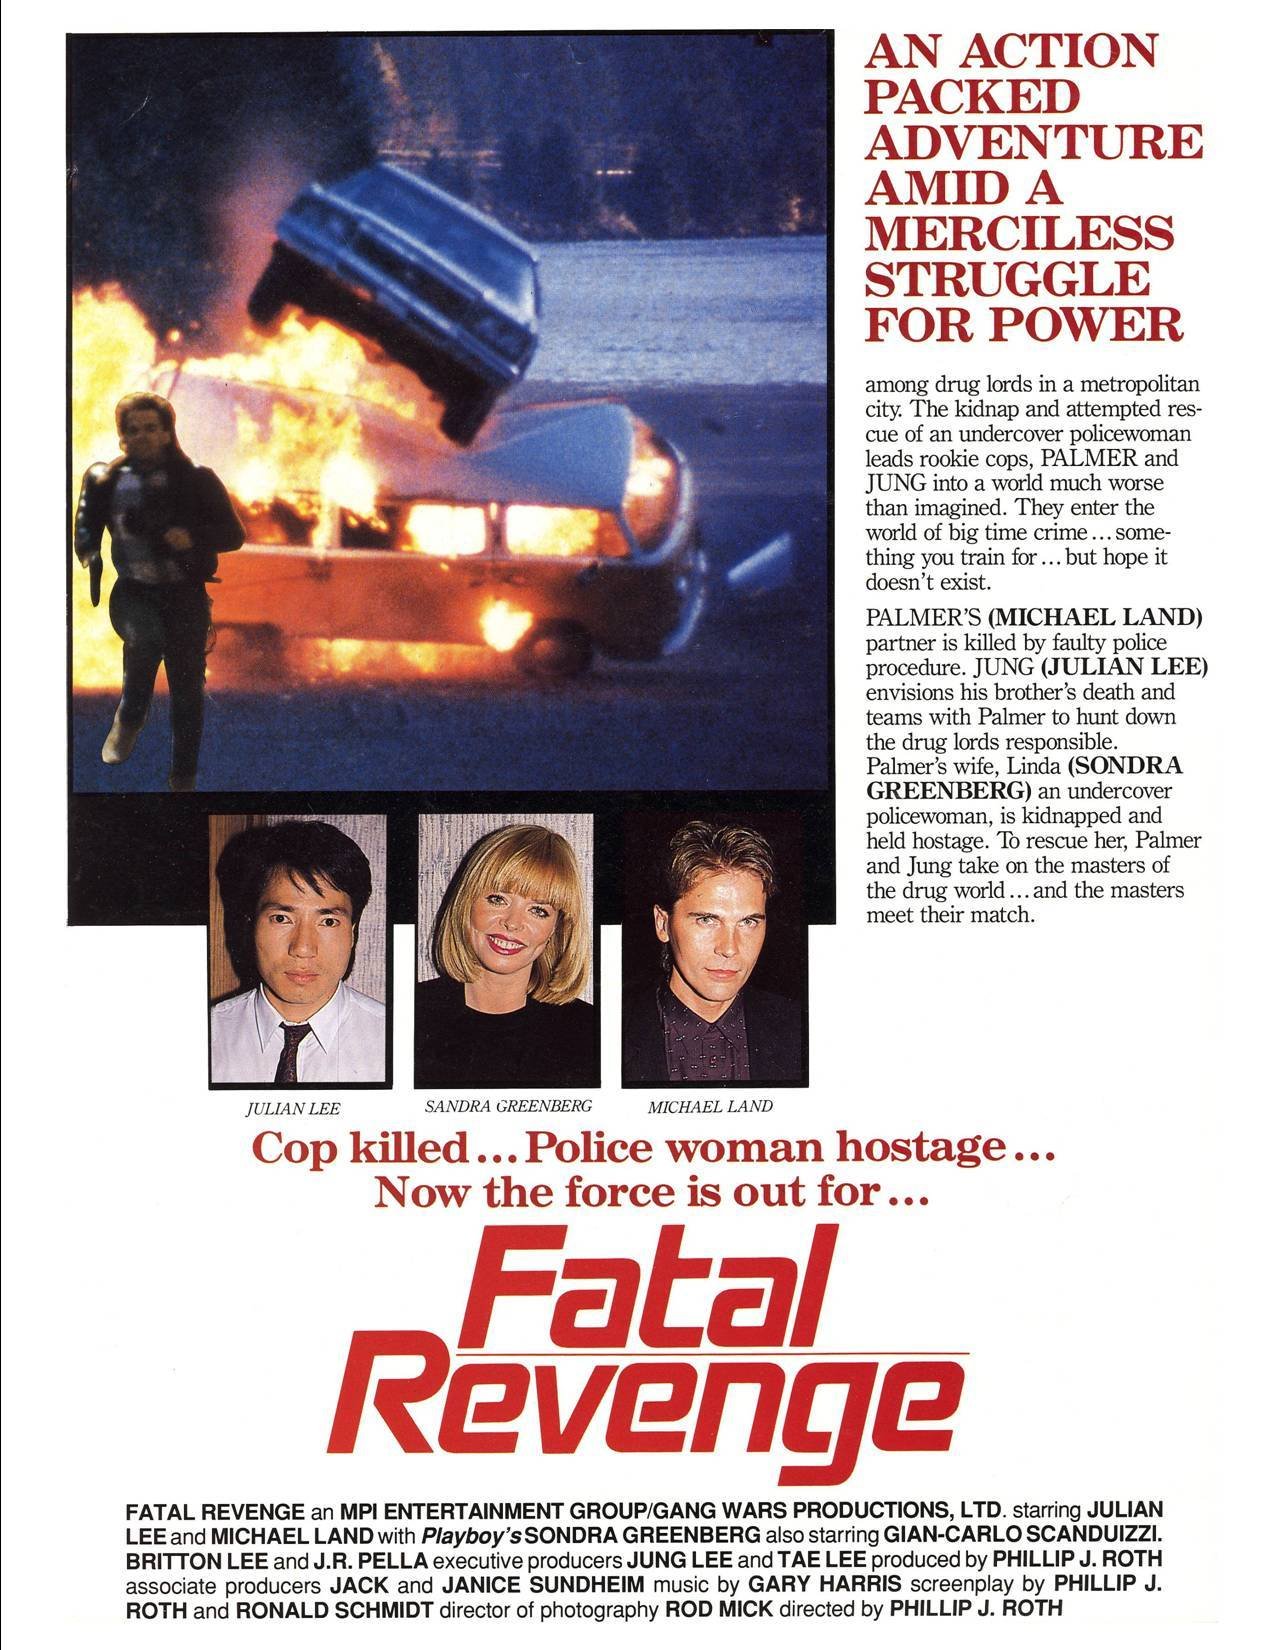 Fatal Revenge (1989) Screenshot 1 